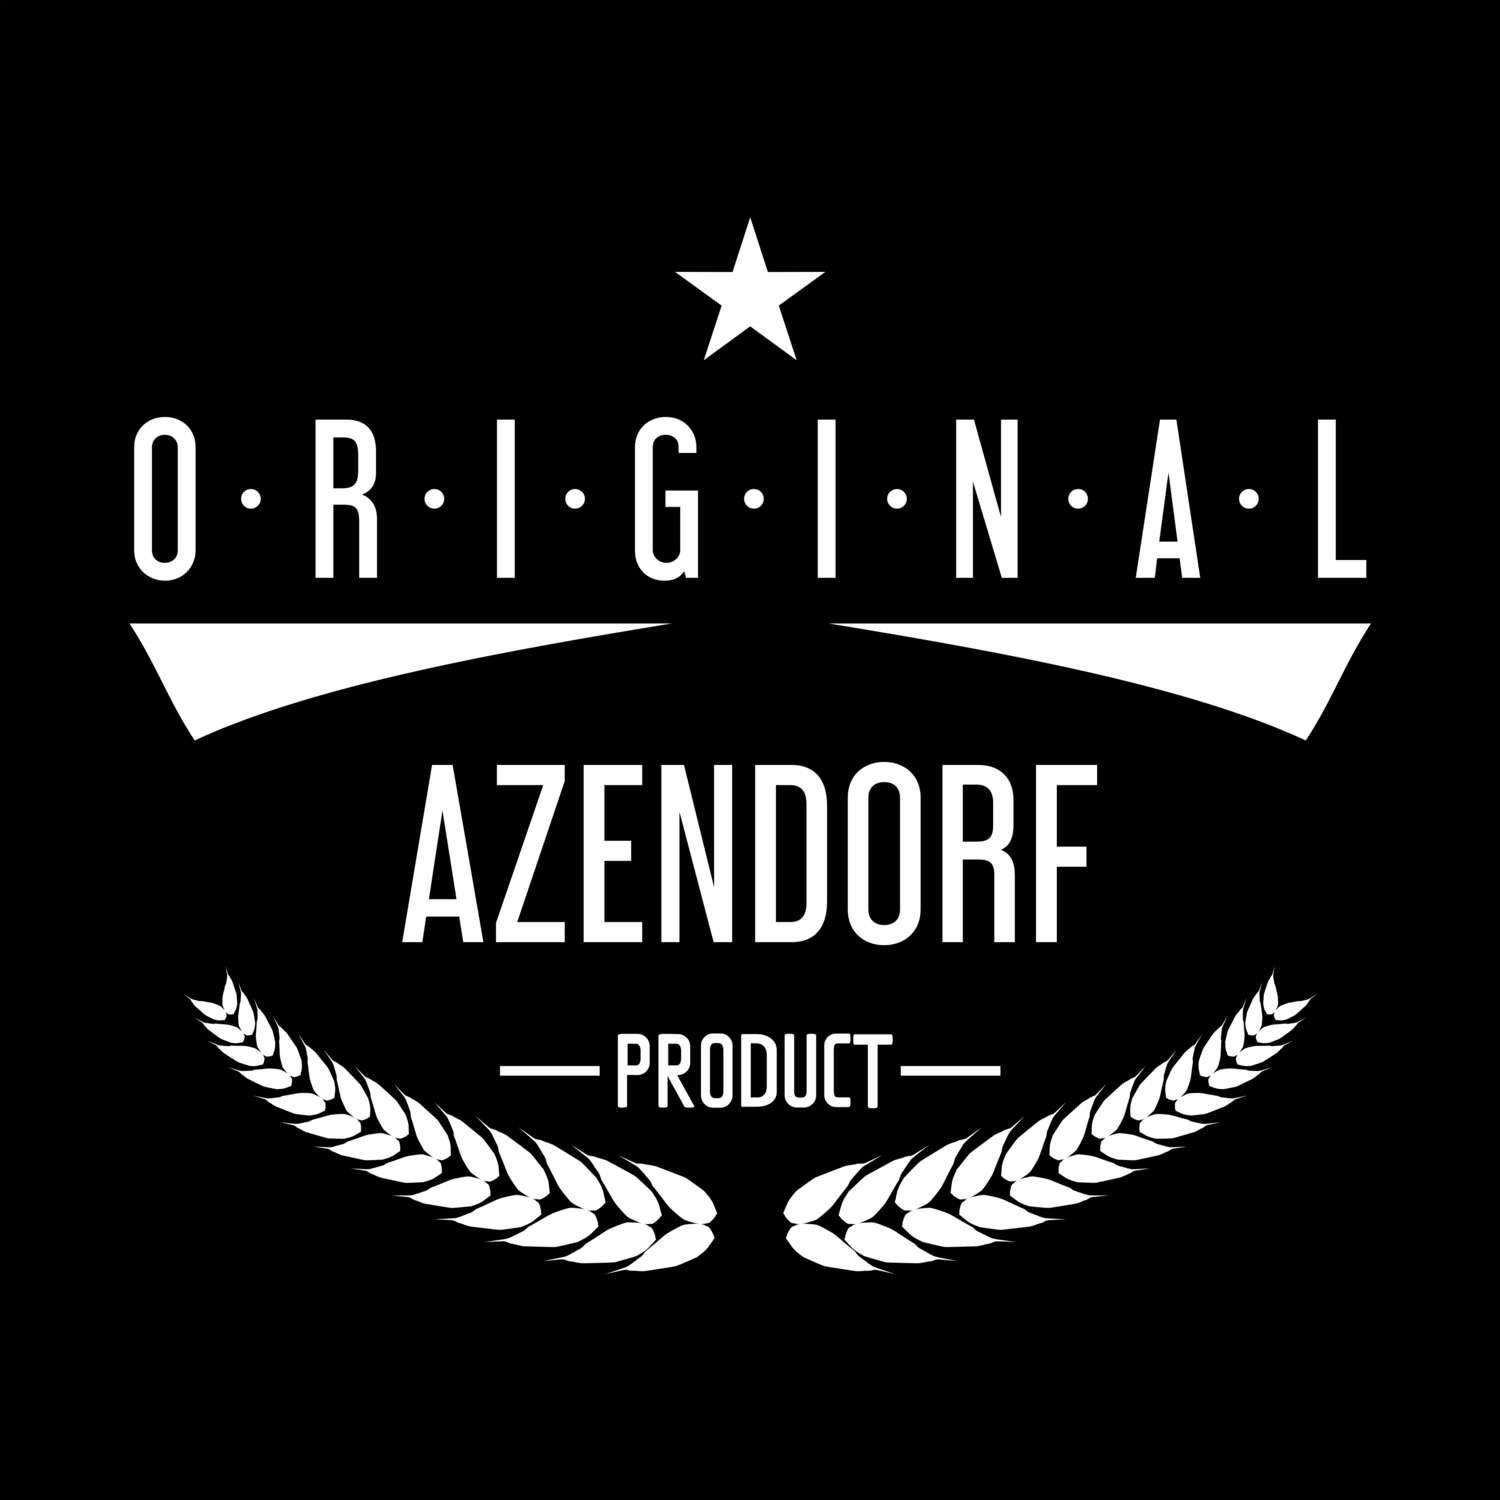 Azendorf T-Shirt »Original Product«